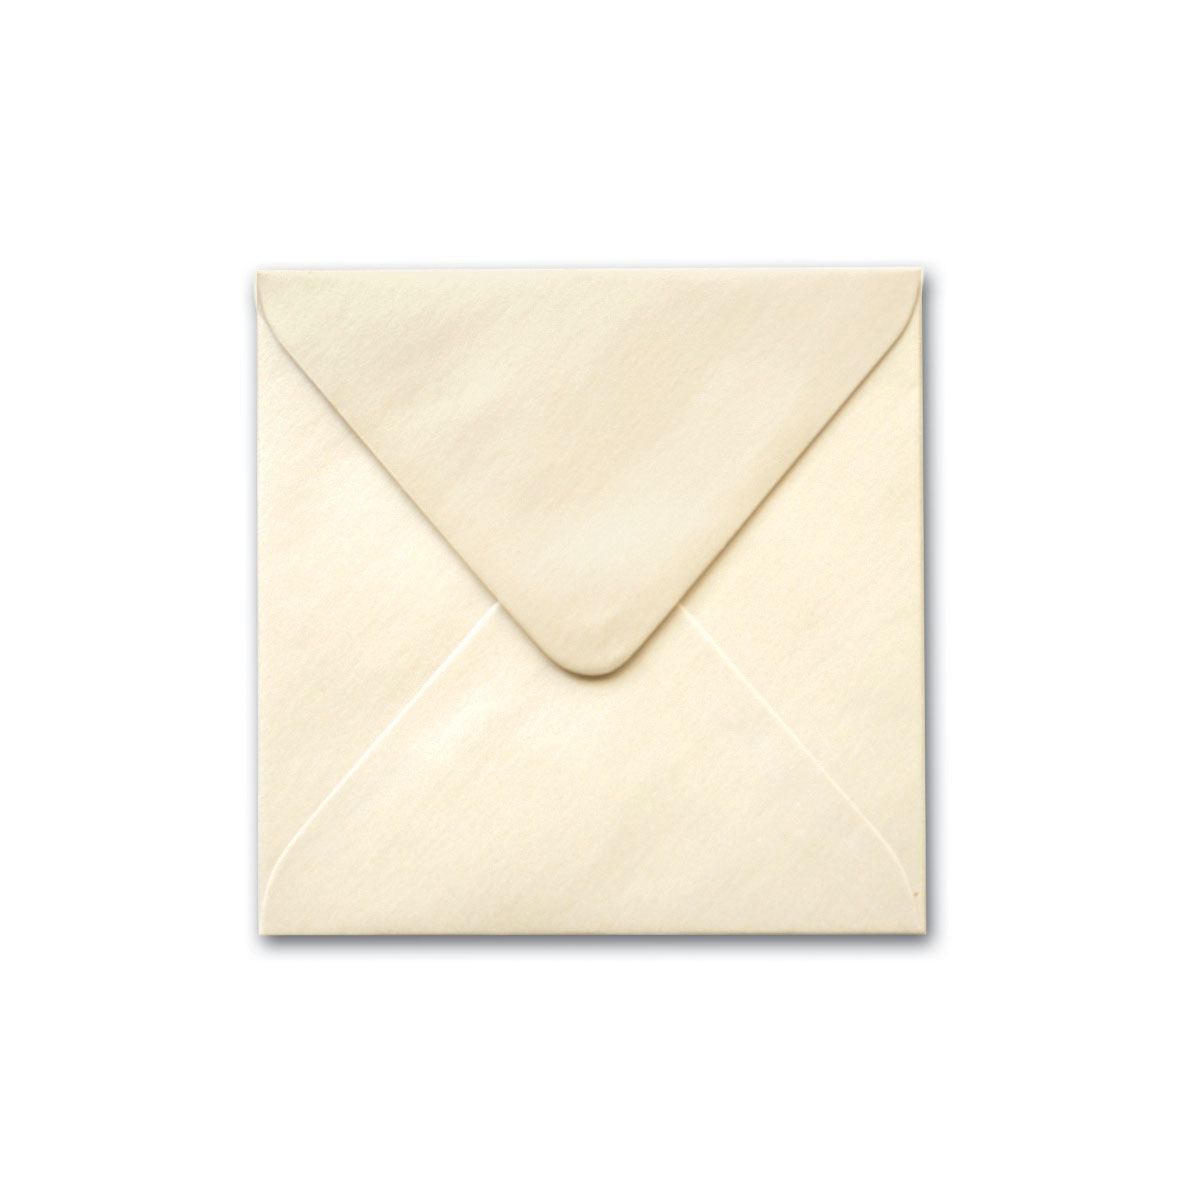 150mm Square Ivory Envelope